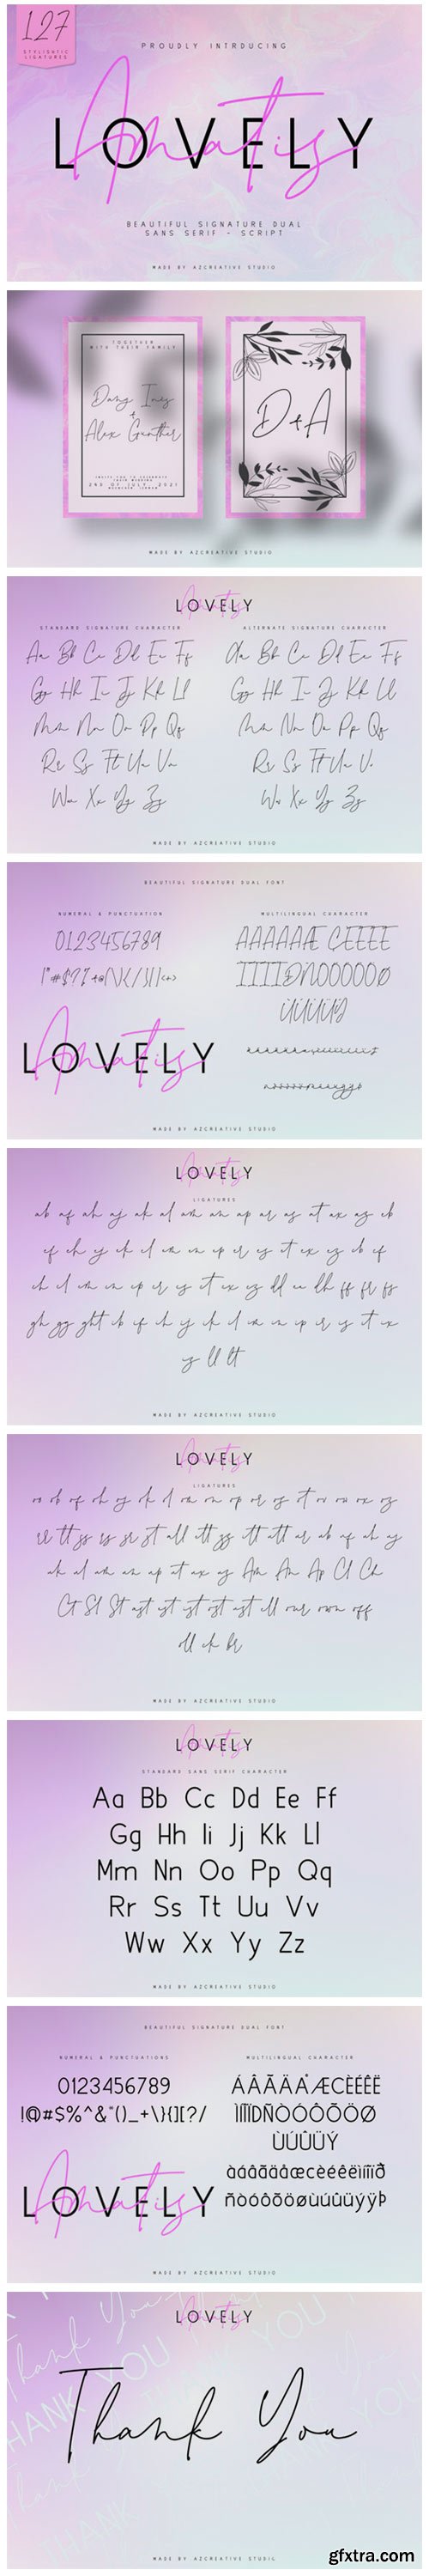 Lovely Amatis Font